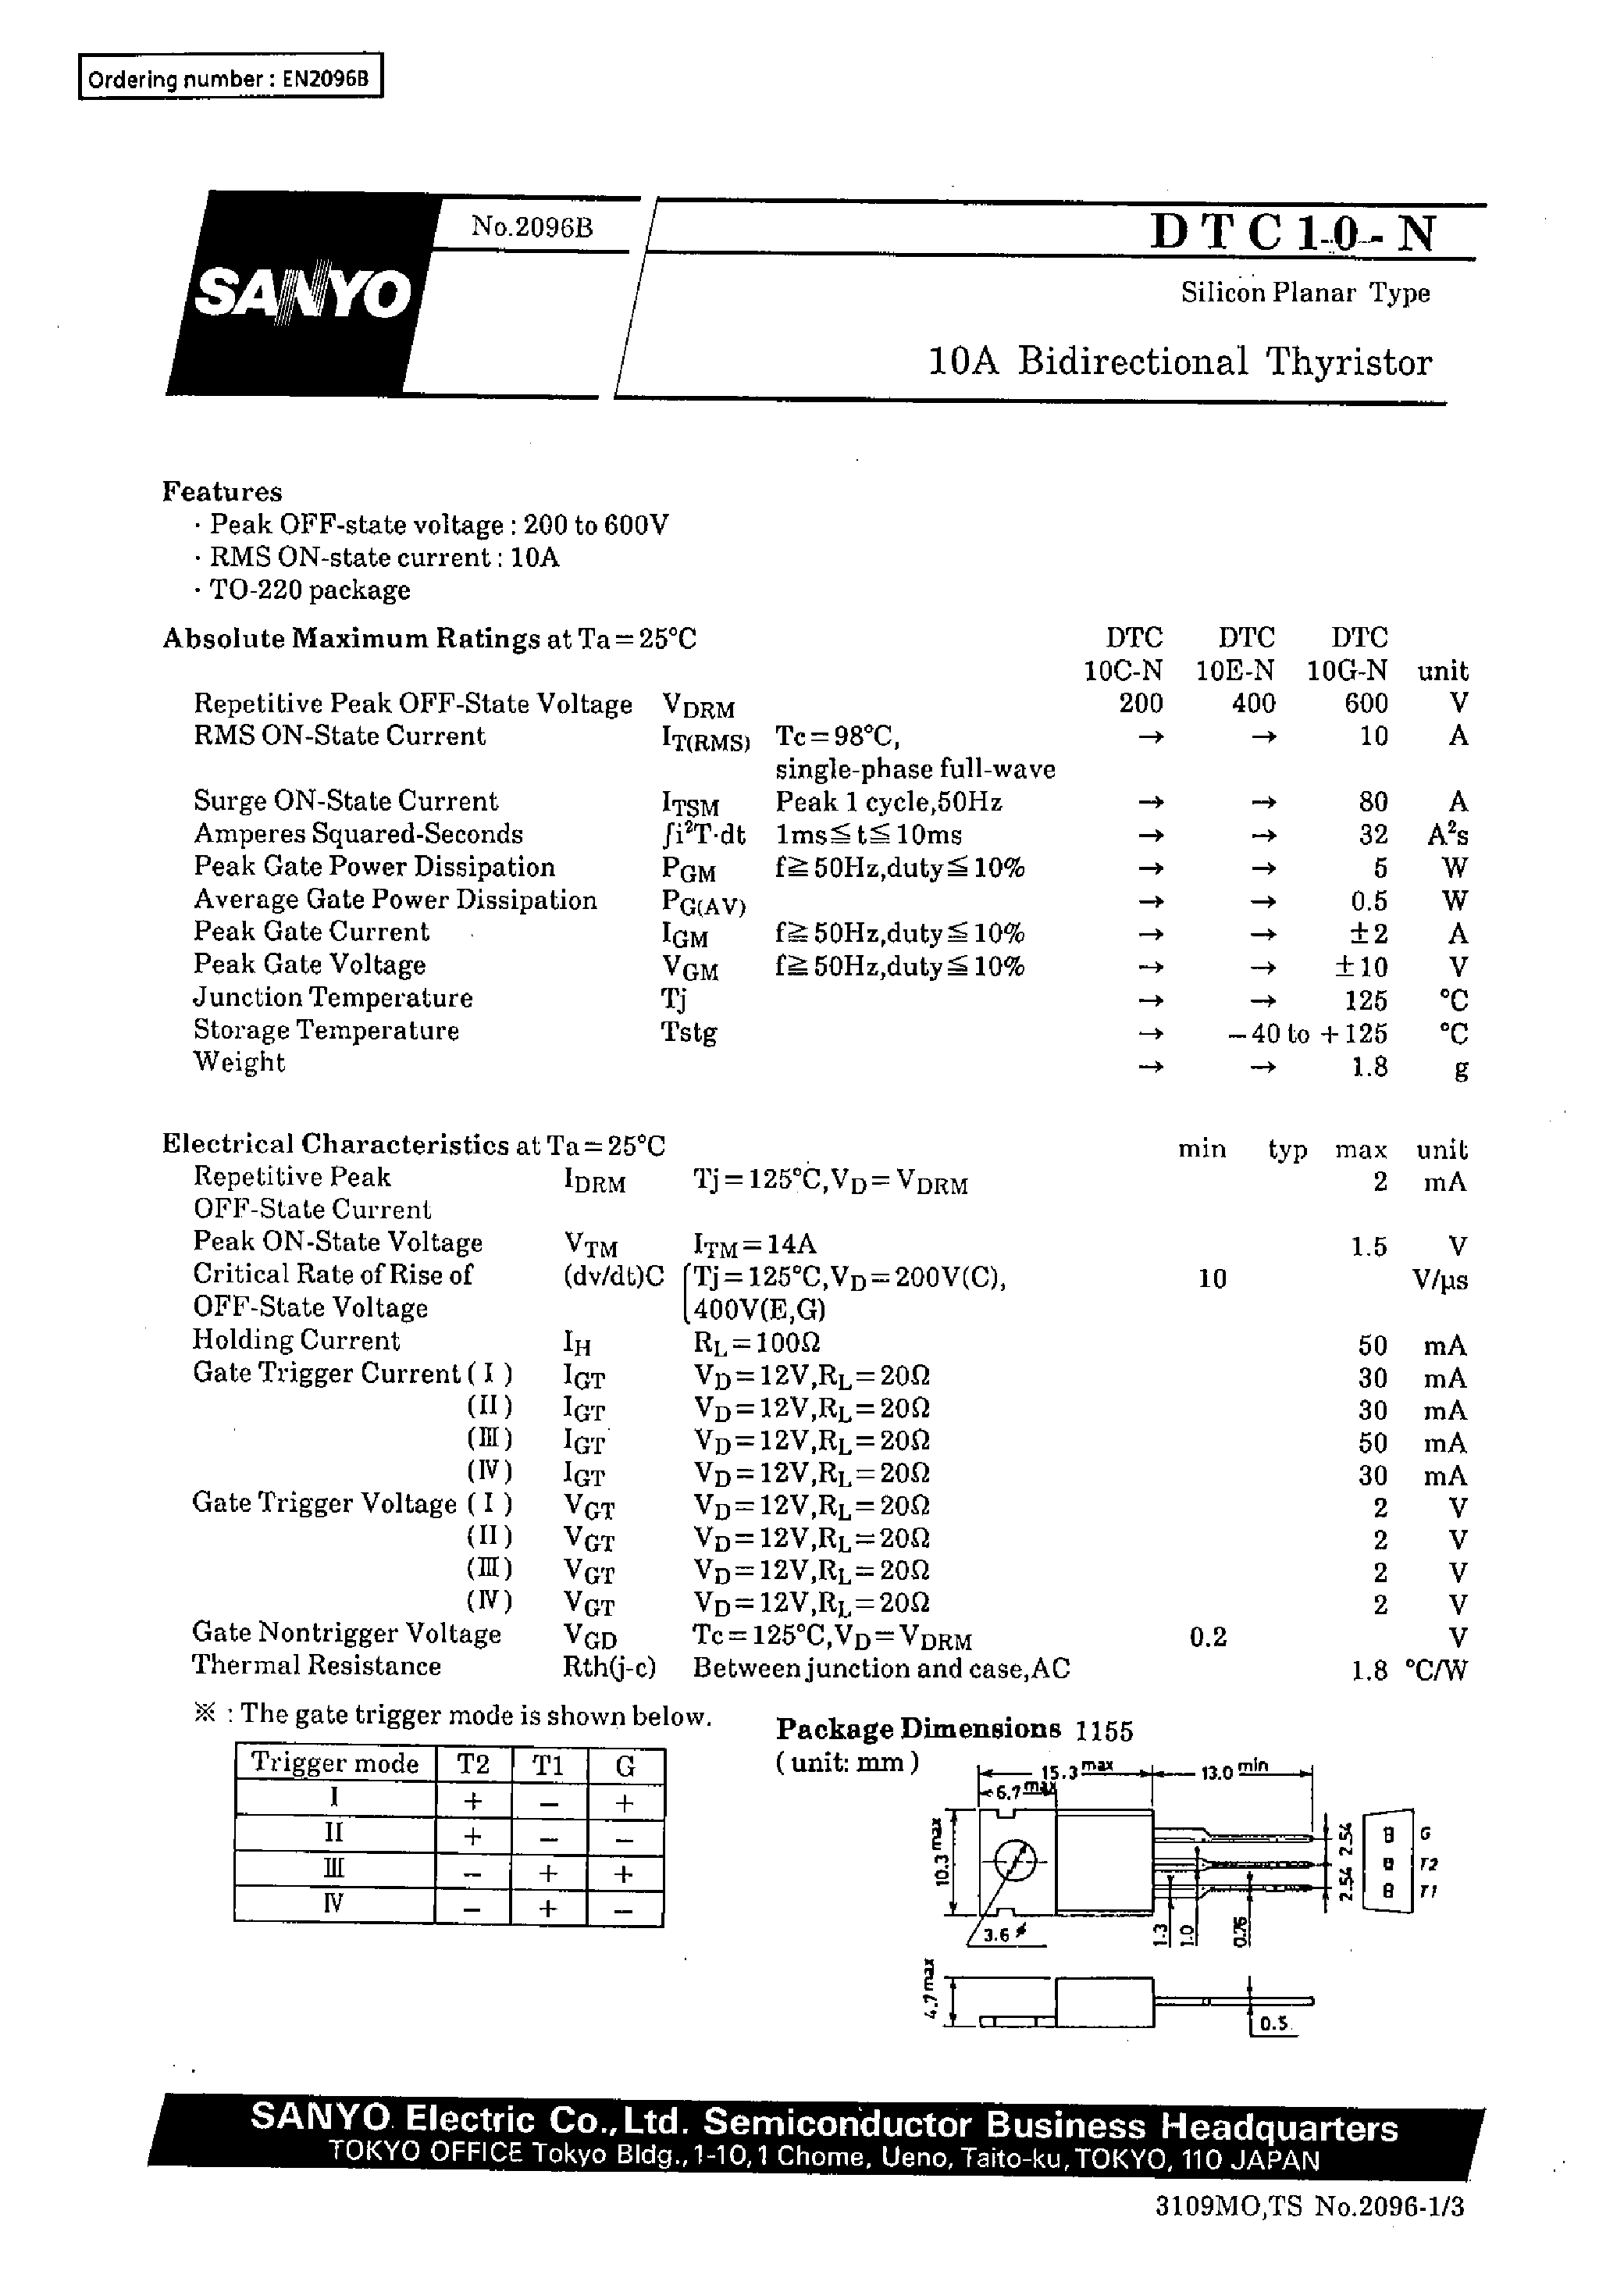 Datasheet DTC10C-N - 10A Bidirectional Thyristor page 1